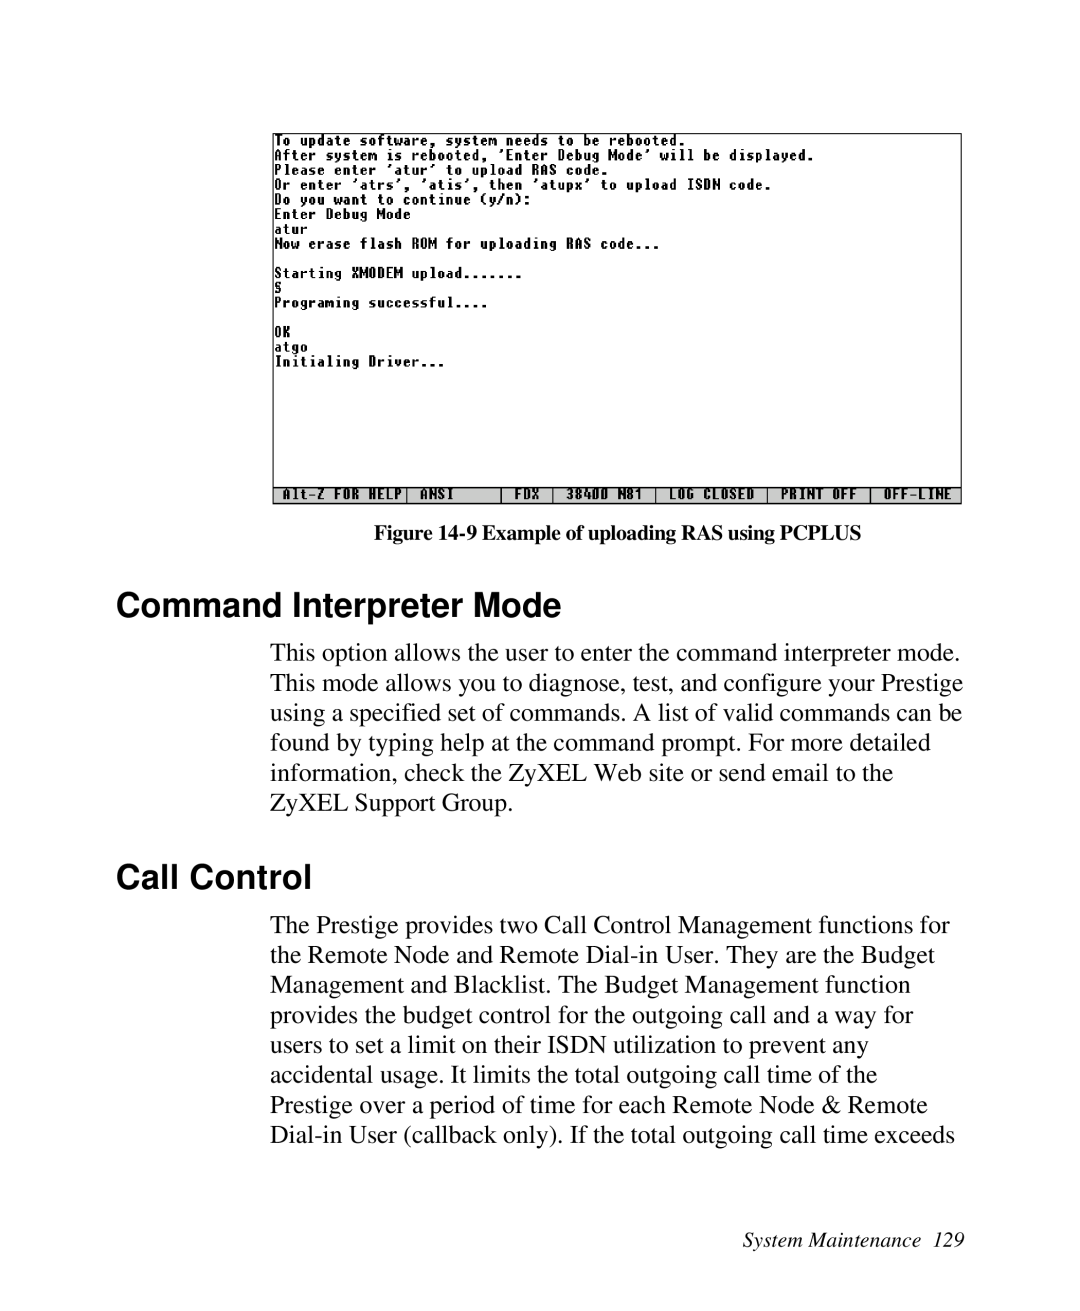 ZyXEL Communications Prestige 128 Command Interpreter Mode, Call Control, 9 Example of uploading RAS using PCPLUS 